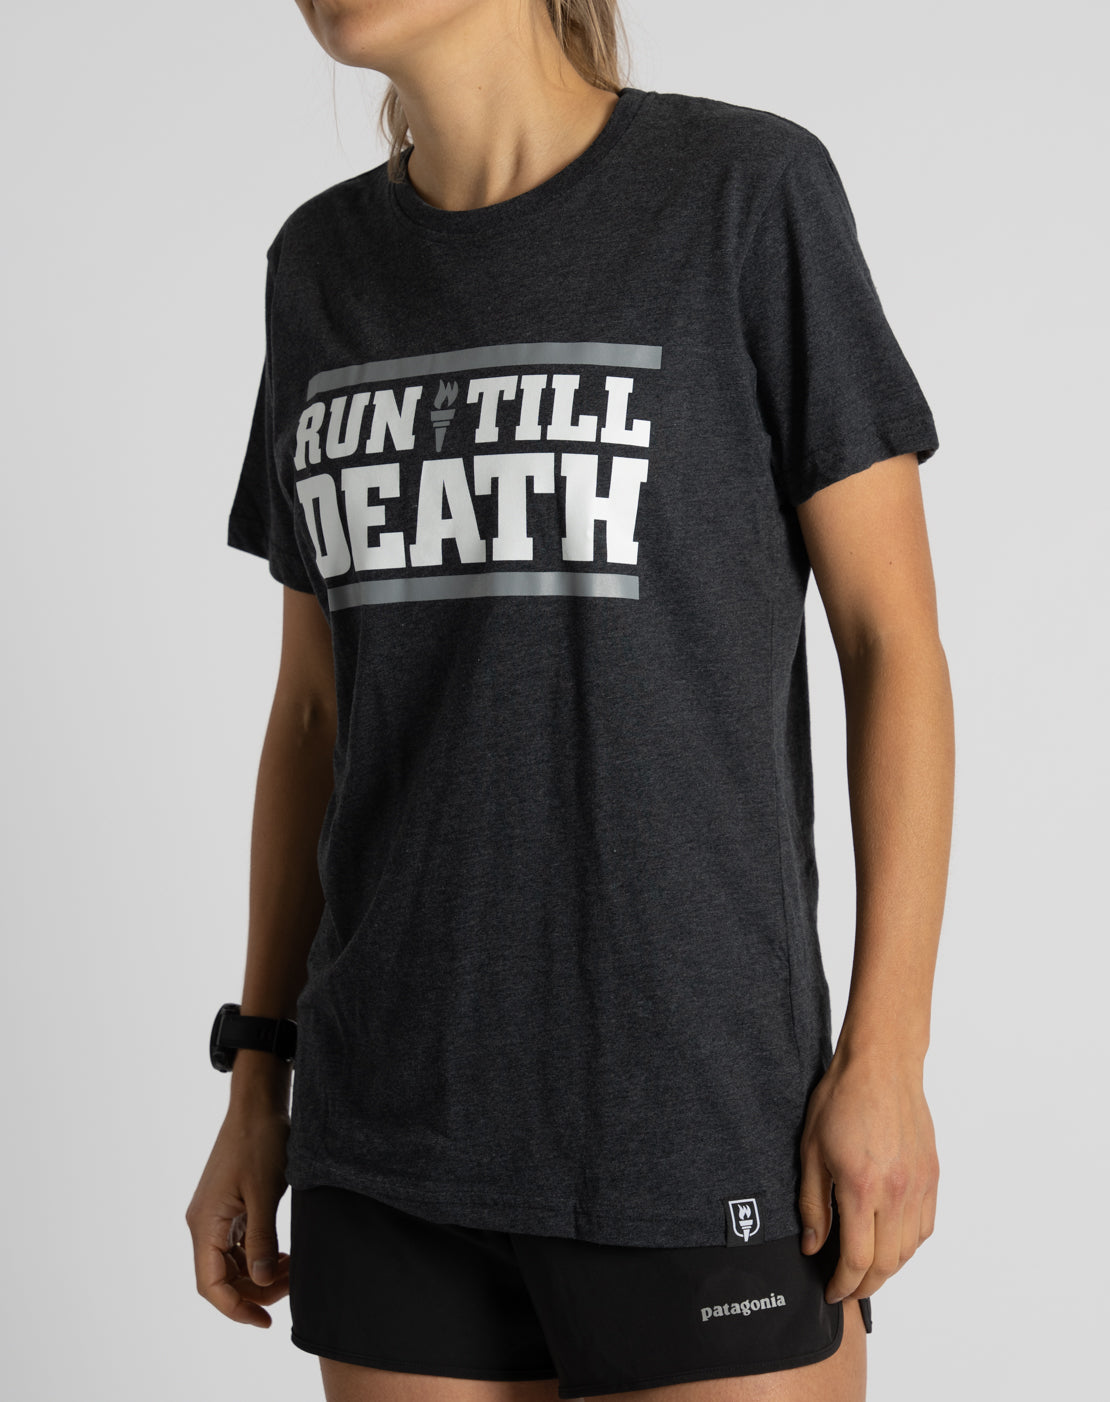 "Run Till Death" T-Shirt (Limited Grey)